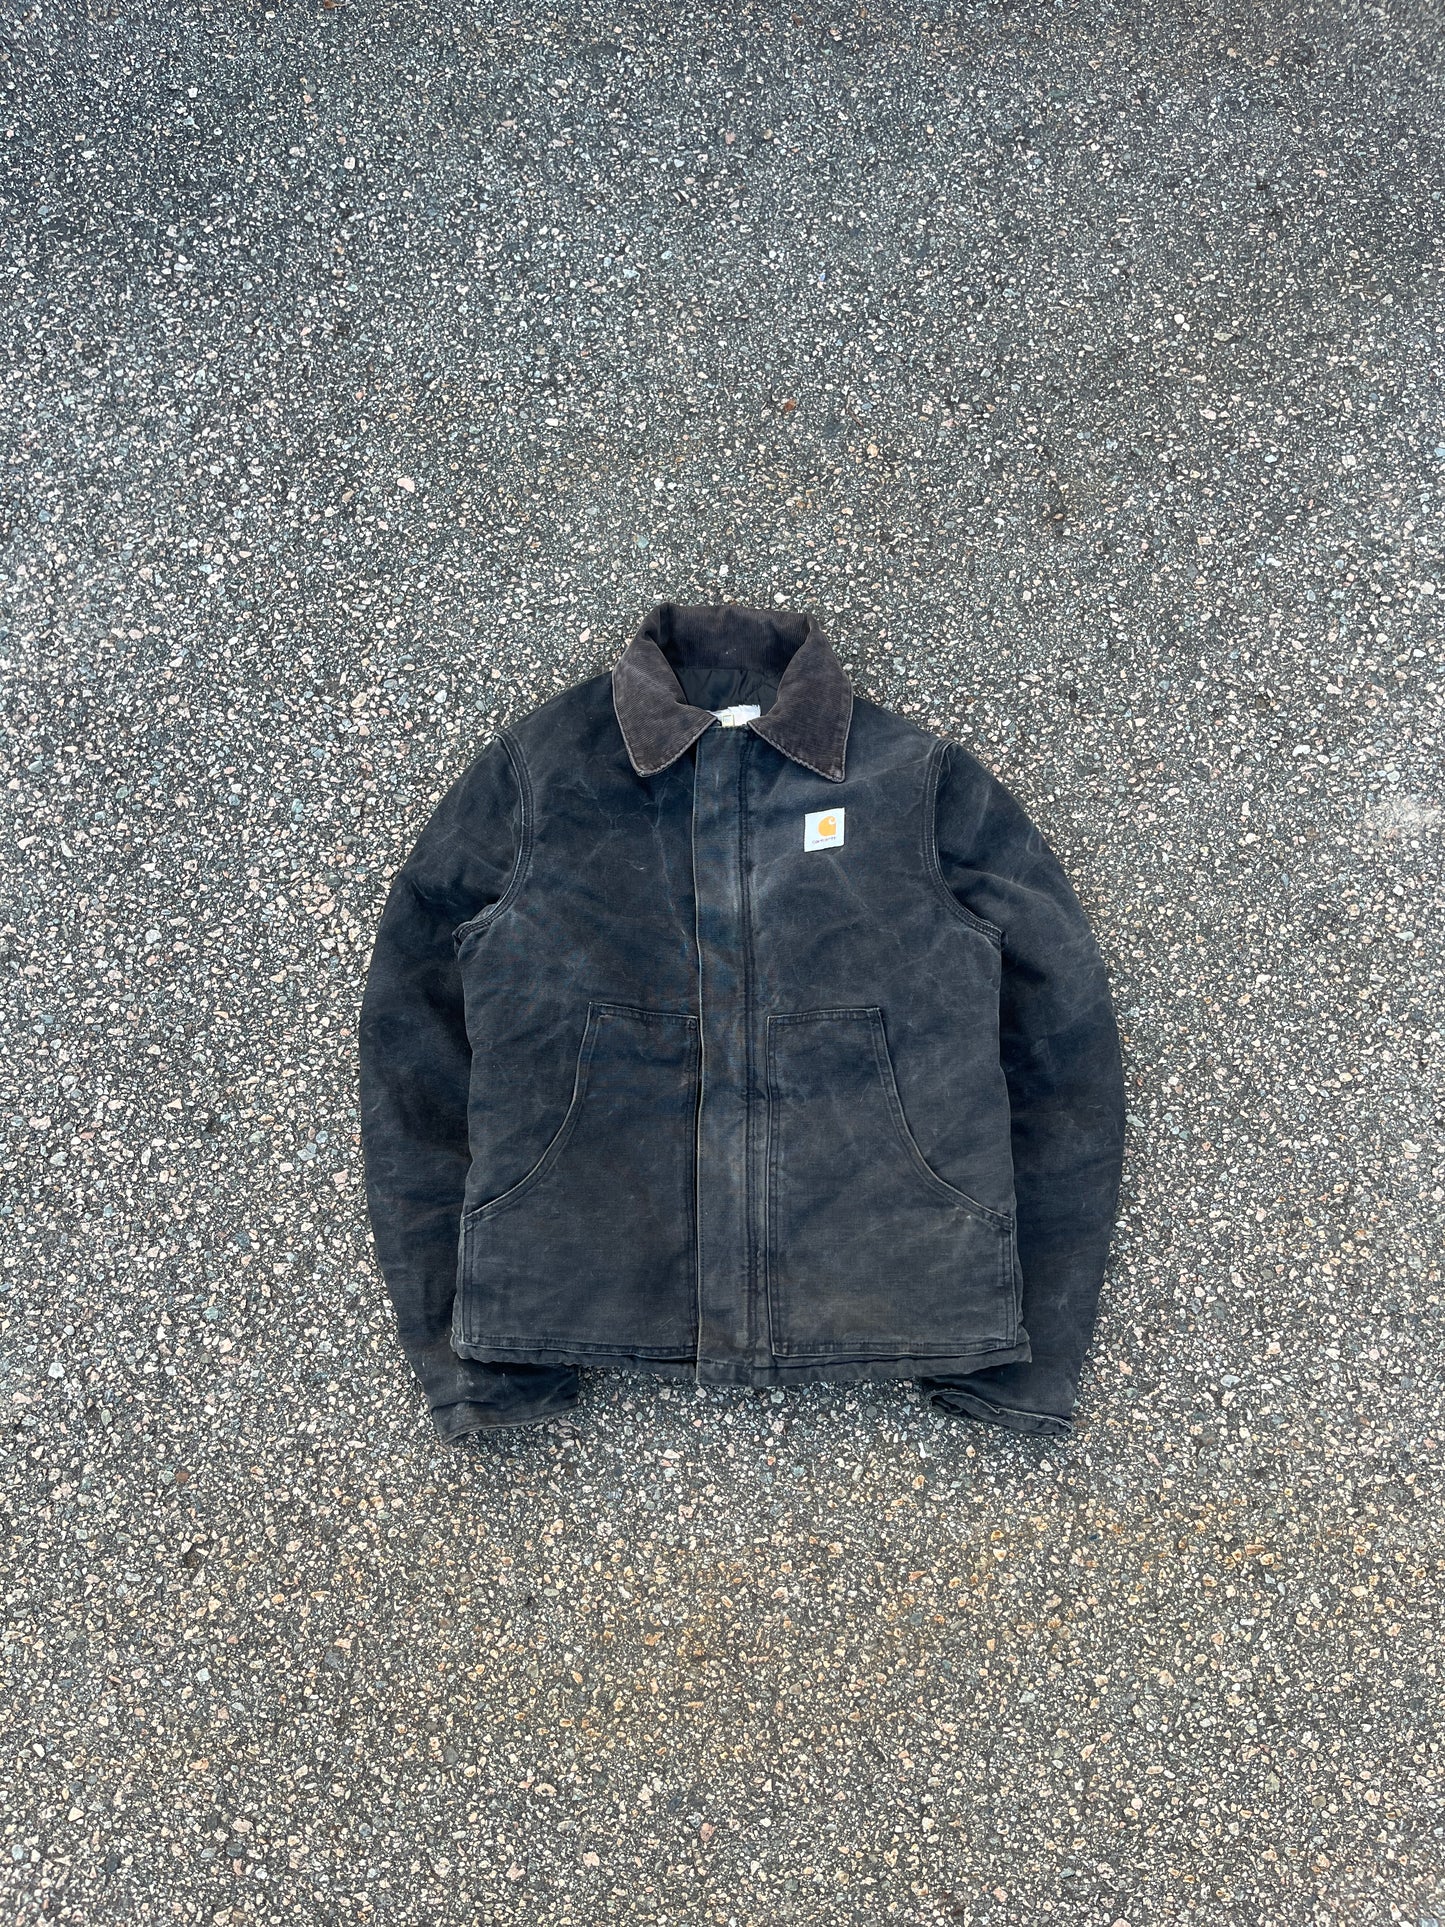 Faded Black Carhartt Arctic Jacket - Medium Tall